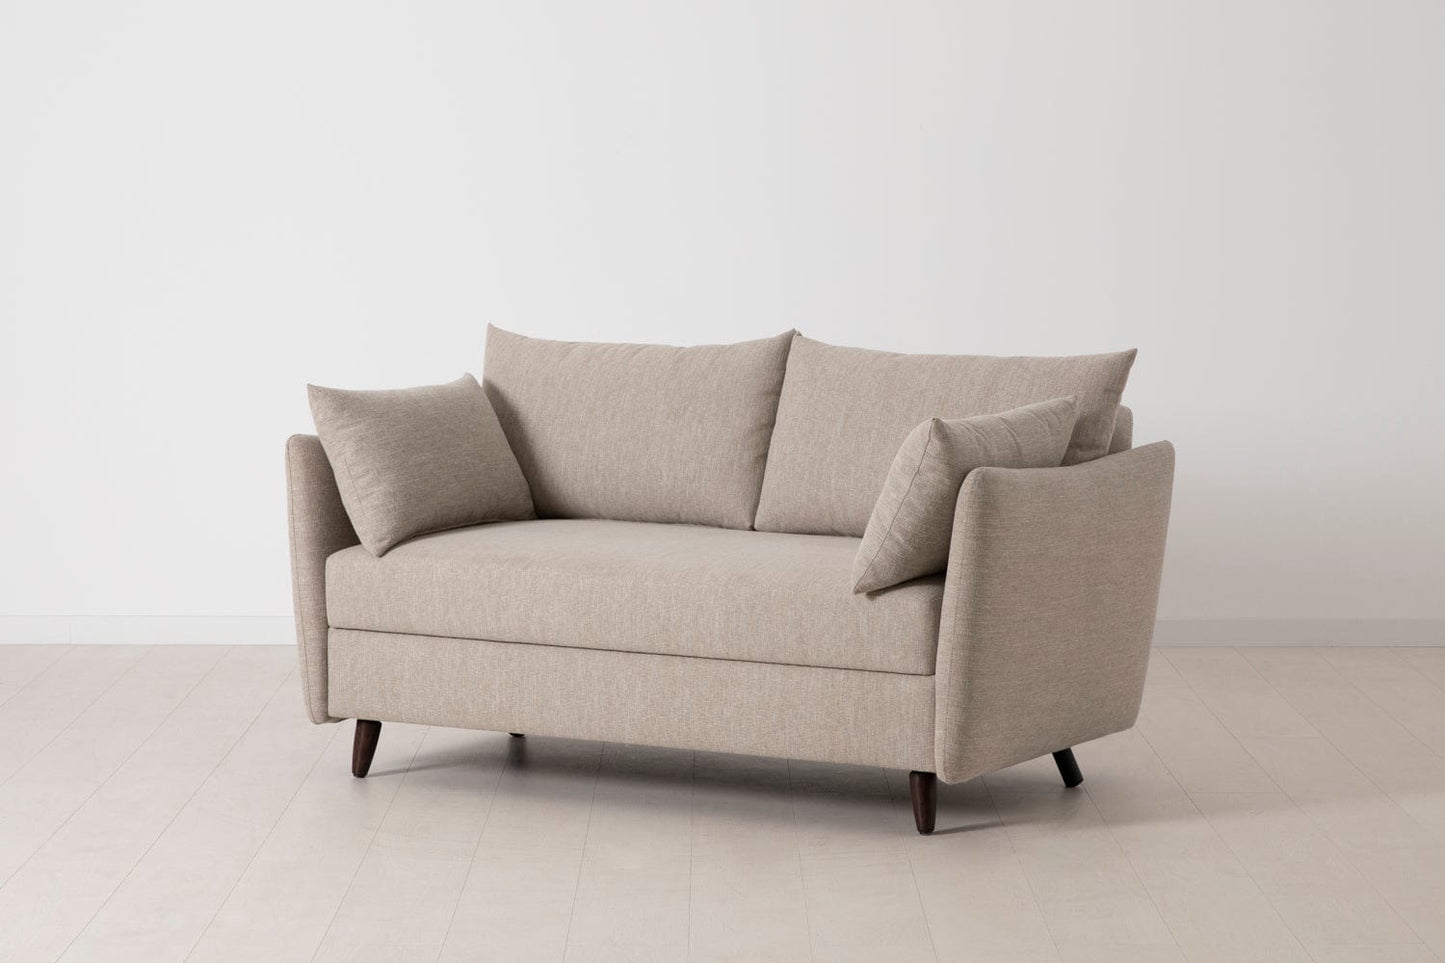 Model 08 Linen Sofa Bed - Double